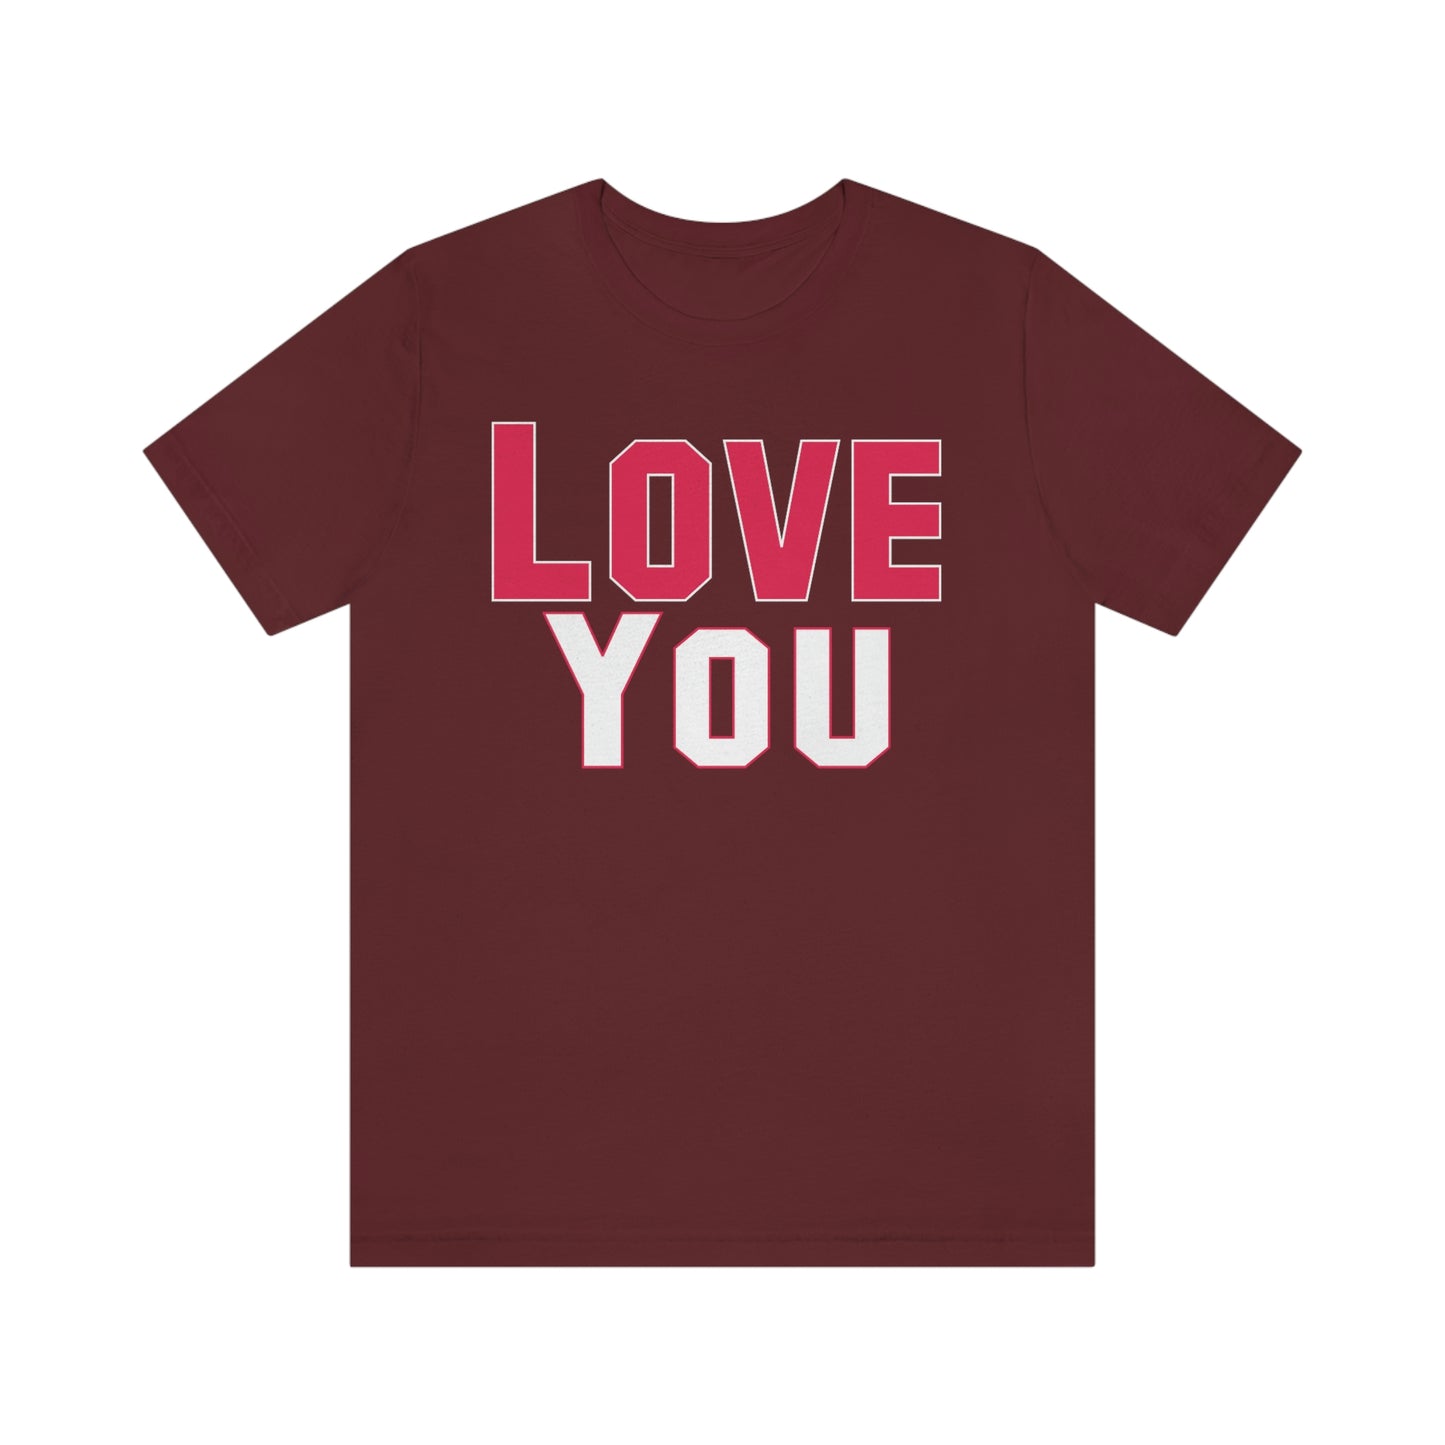 Love you T-shirt